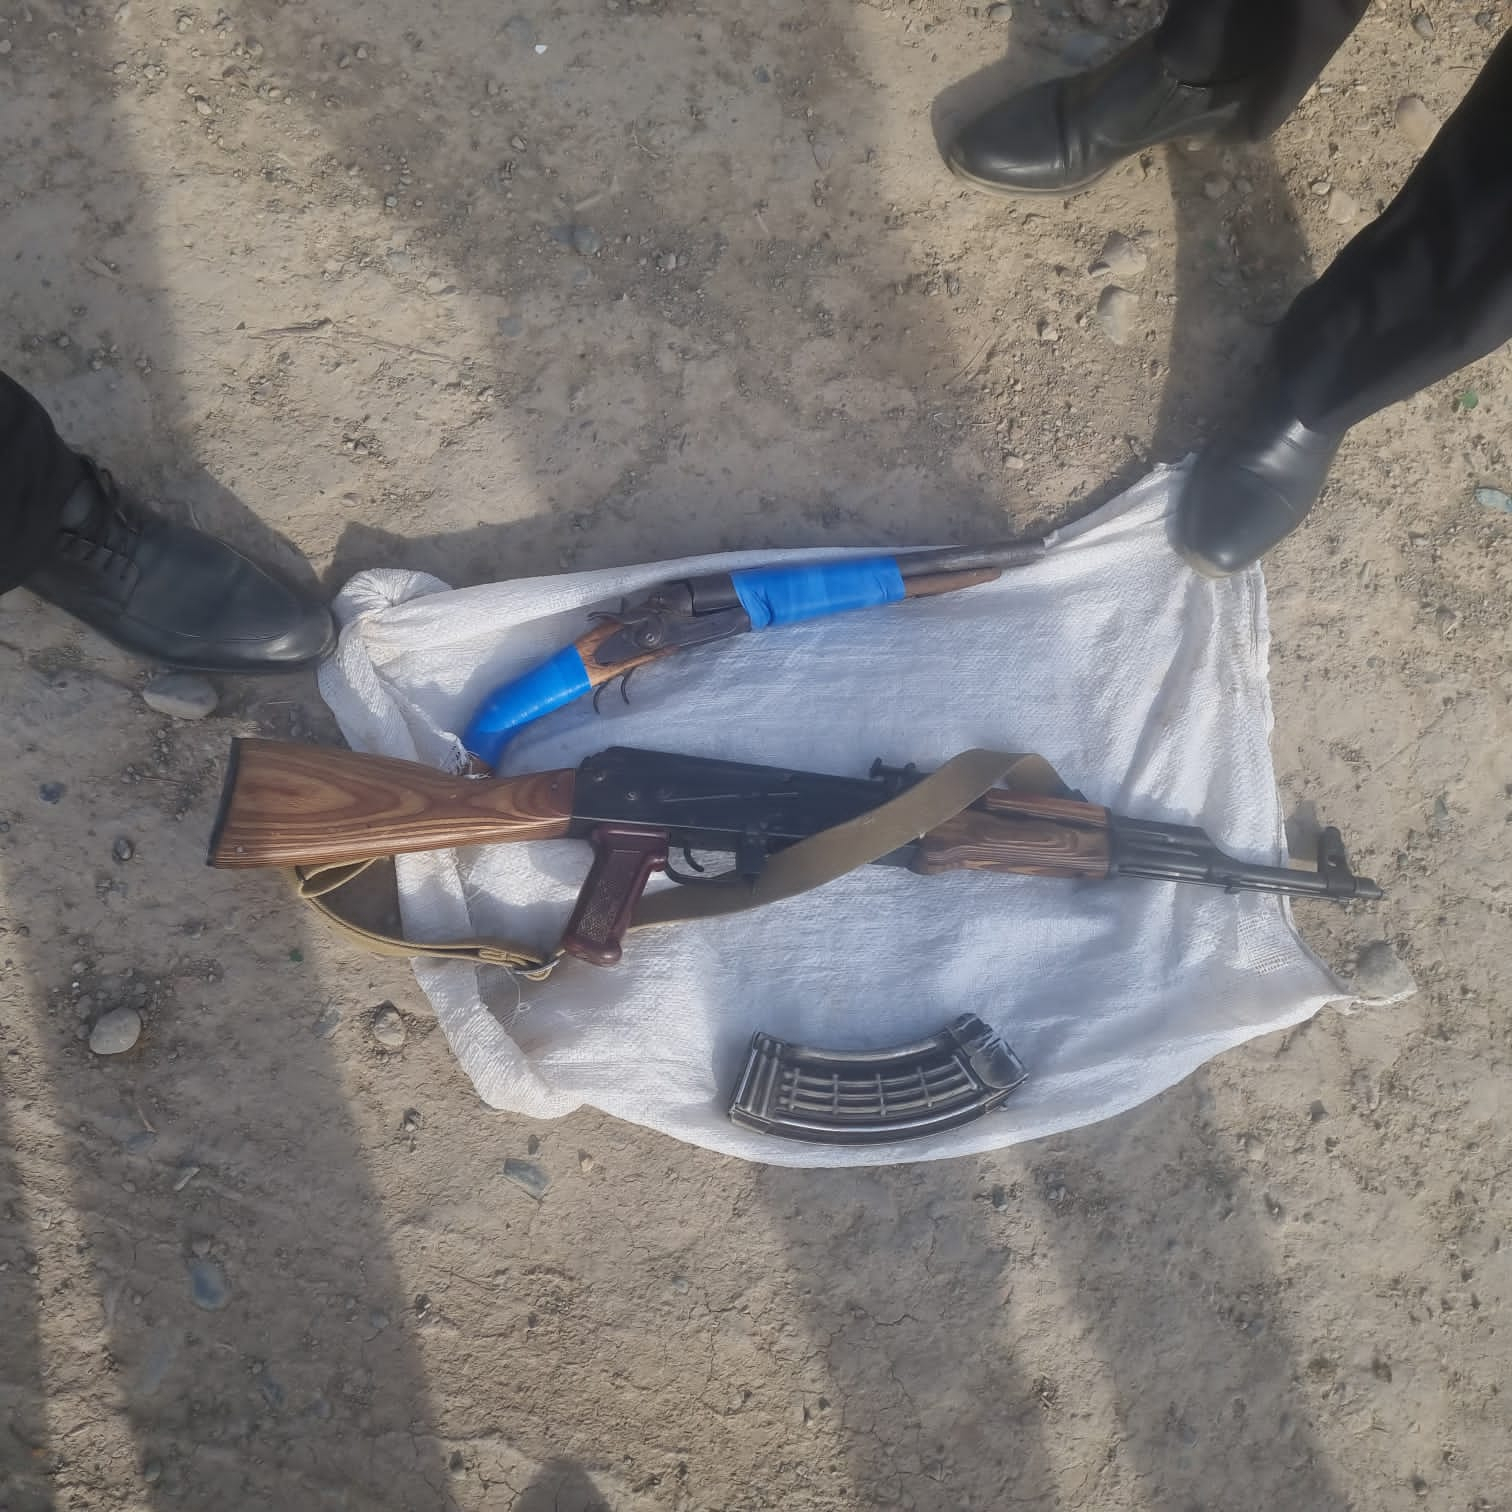 В Самухе на обочине дороги обнаружено оружие и боеприпасы - ФОТО